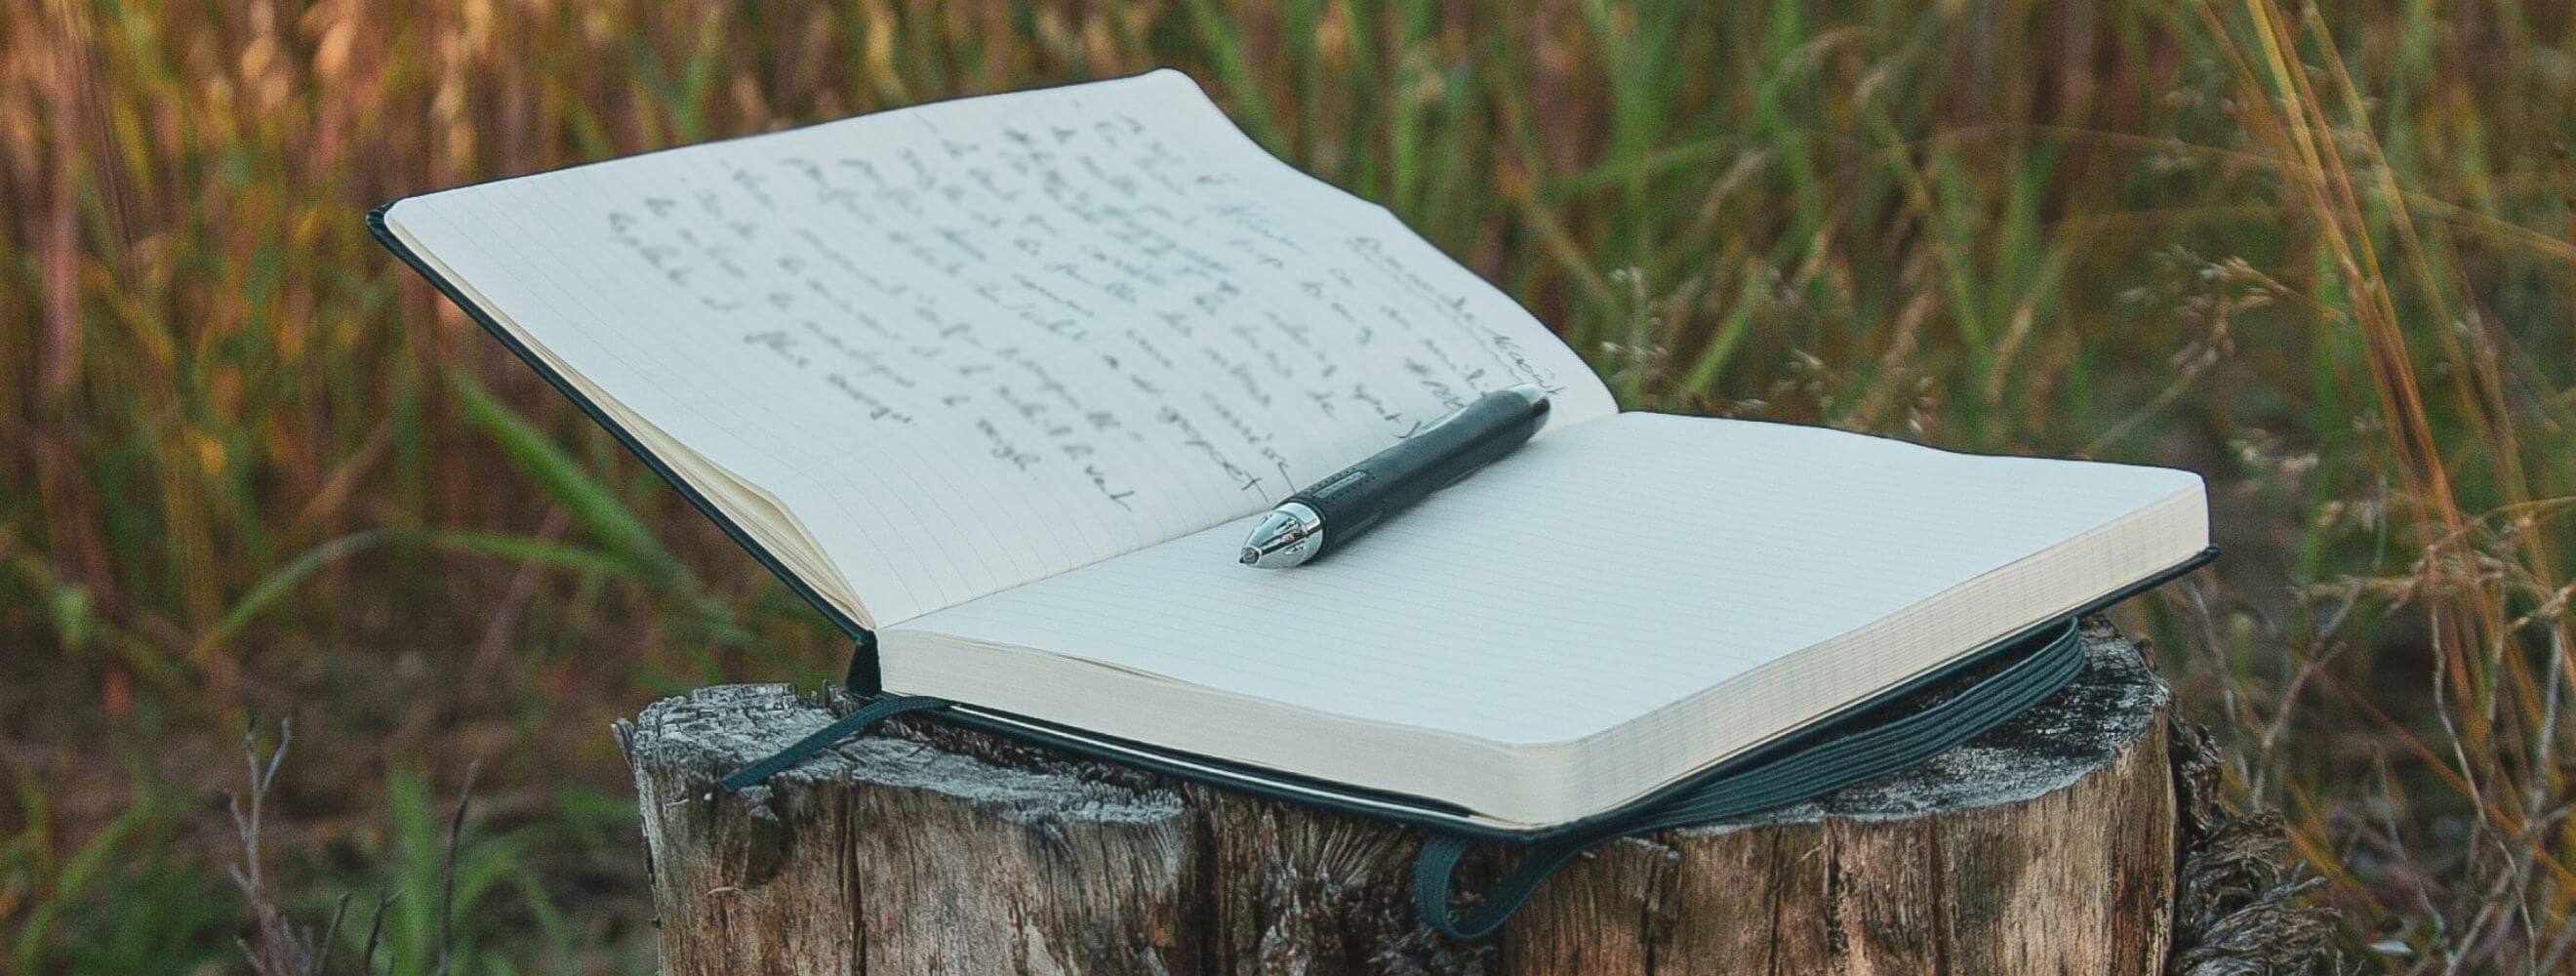 journal on a tree stump